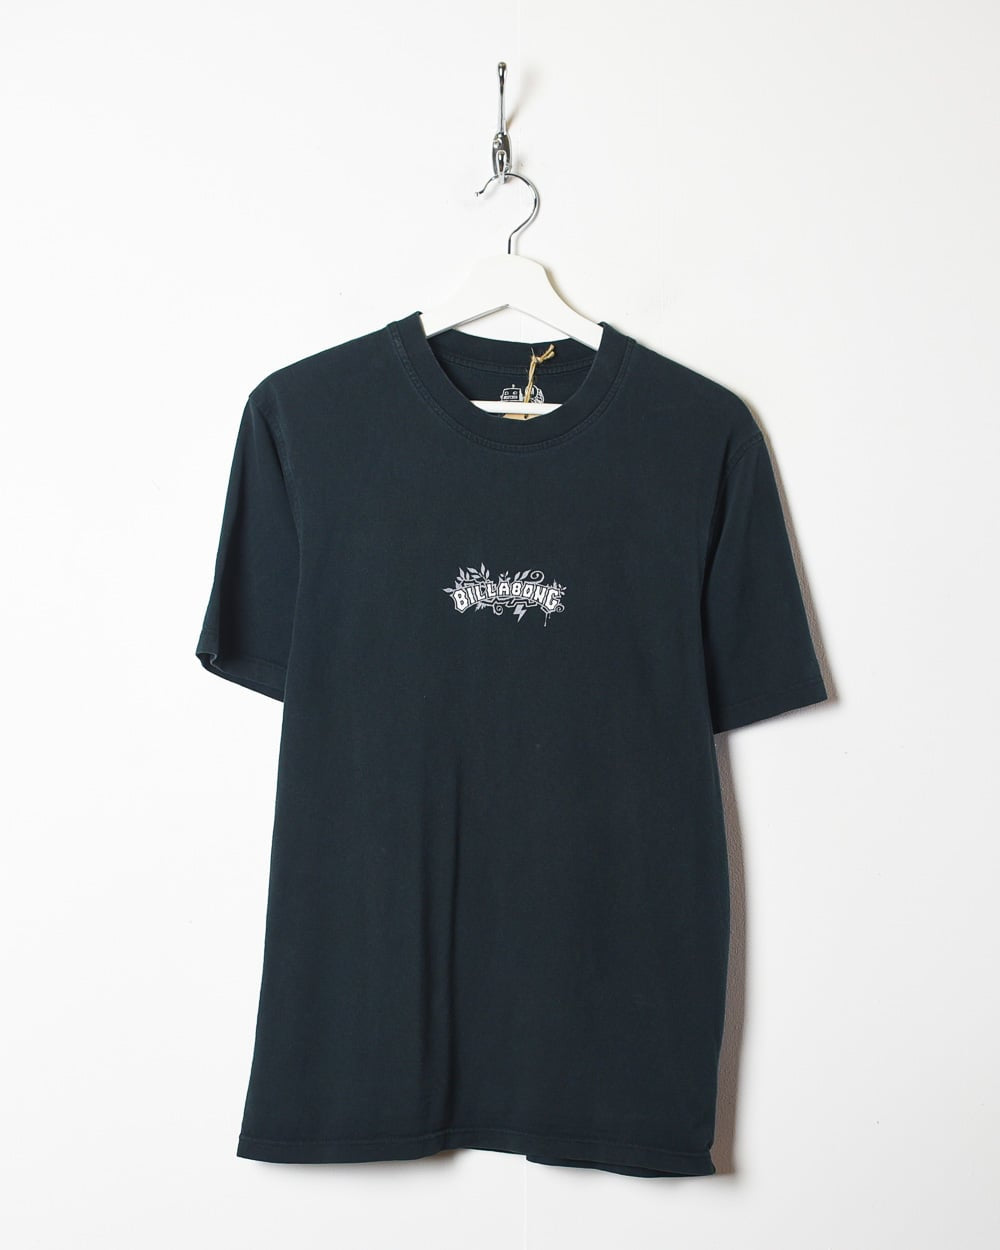 Black Billabong T-Shirt - Medium